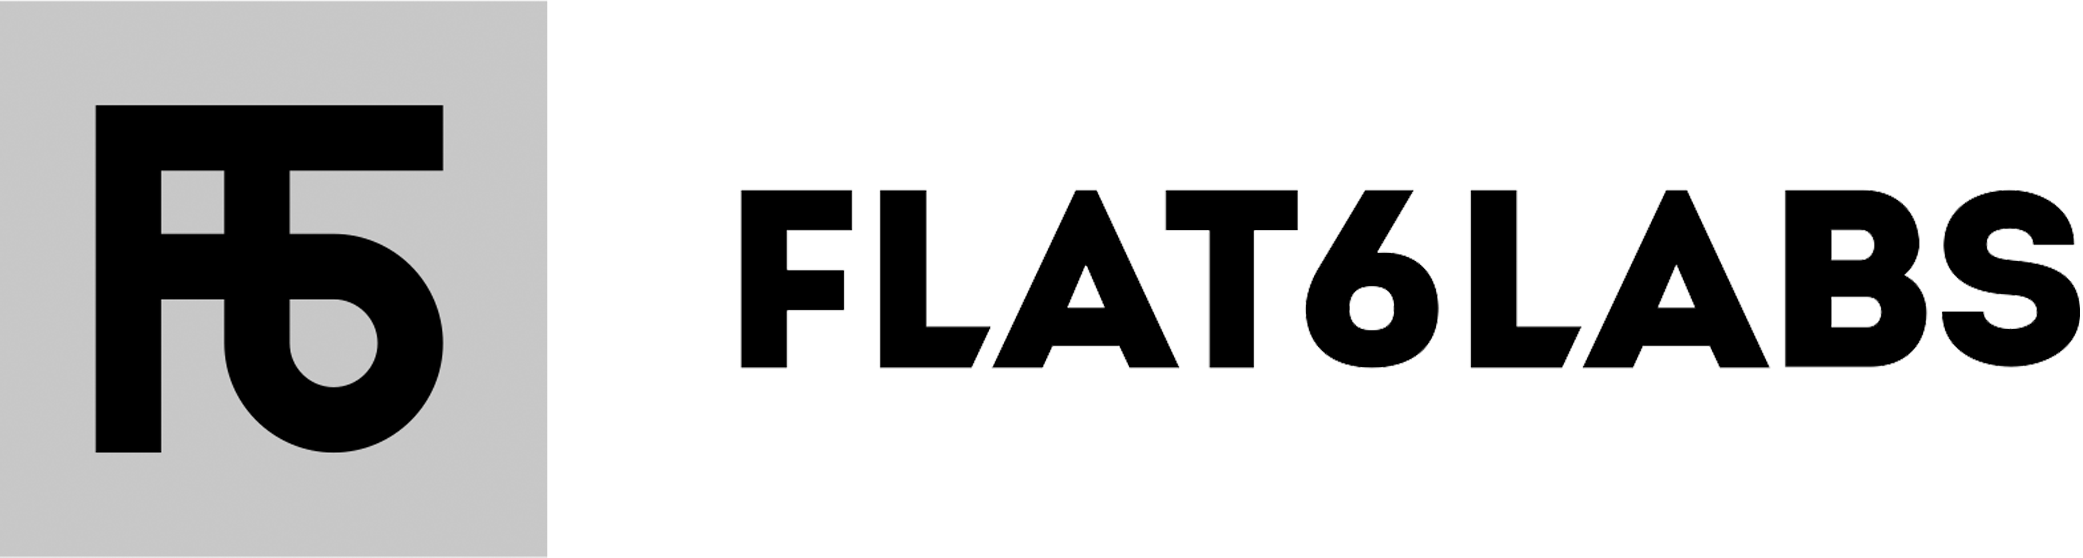 Flat 6 Labs